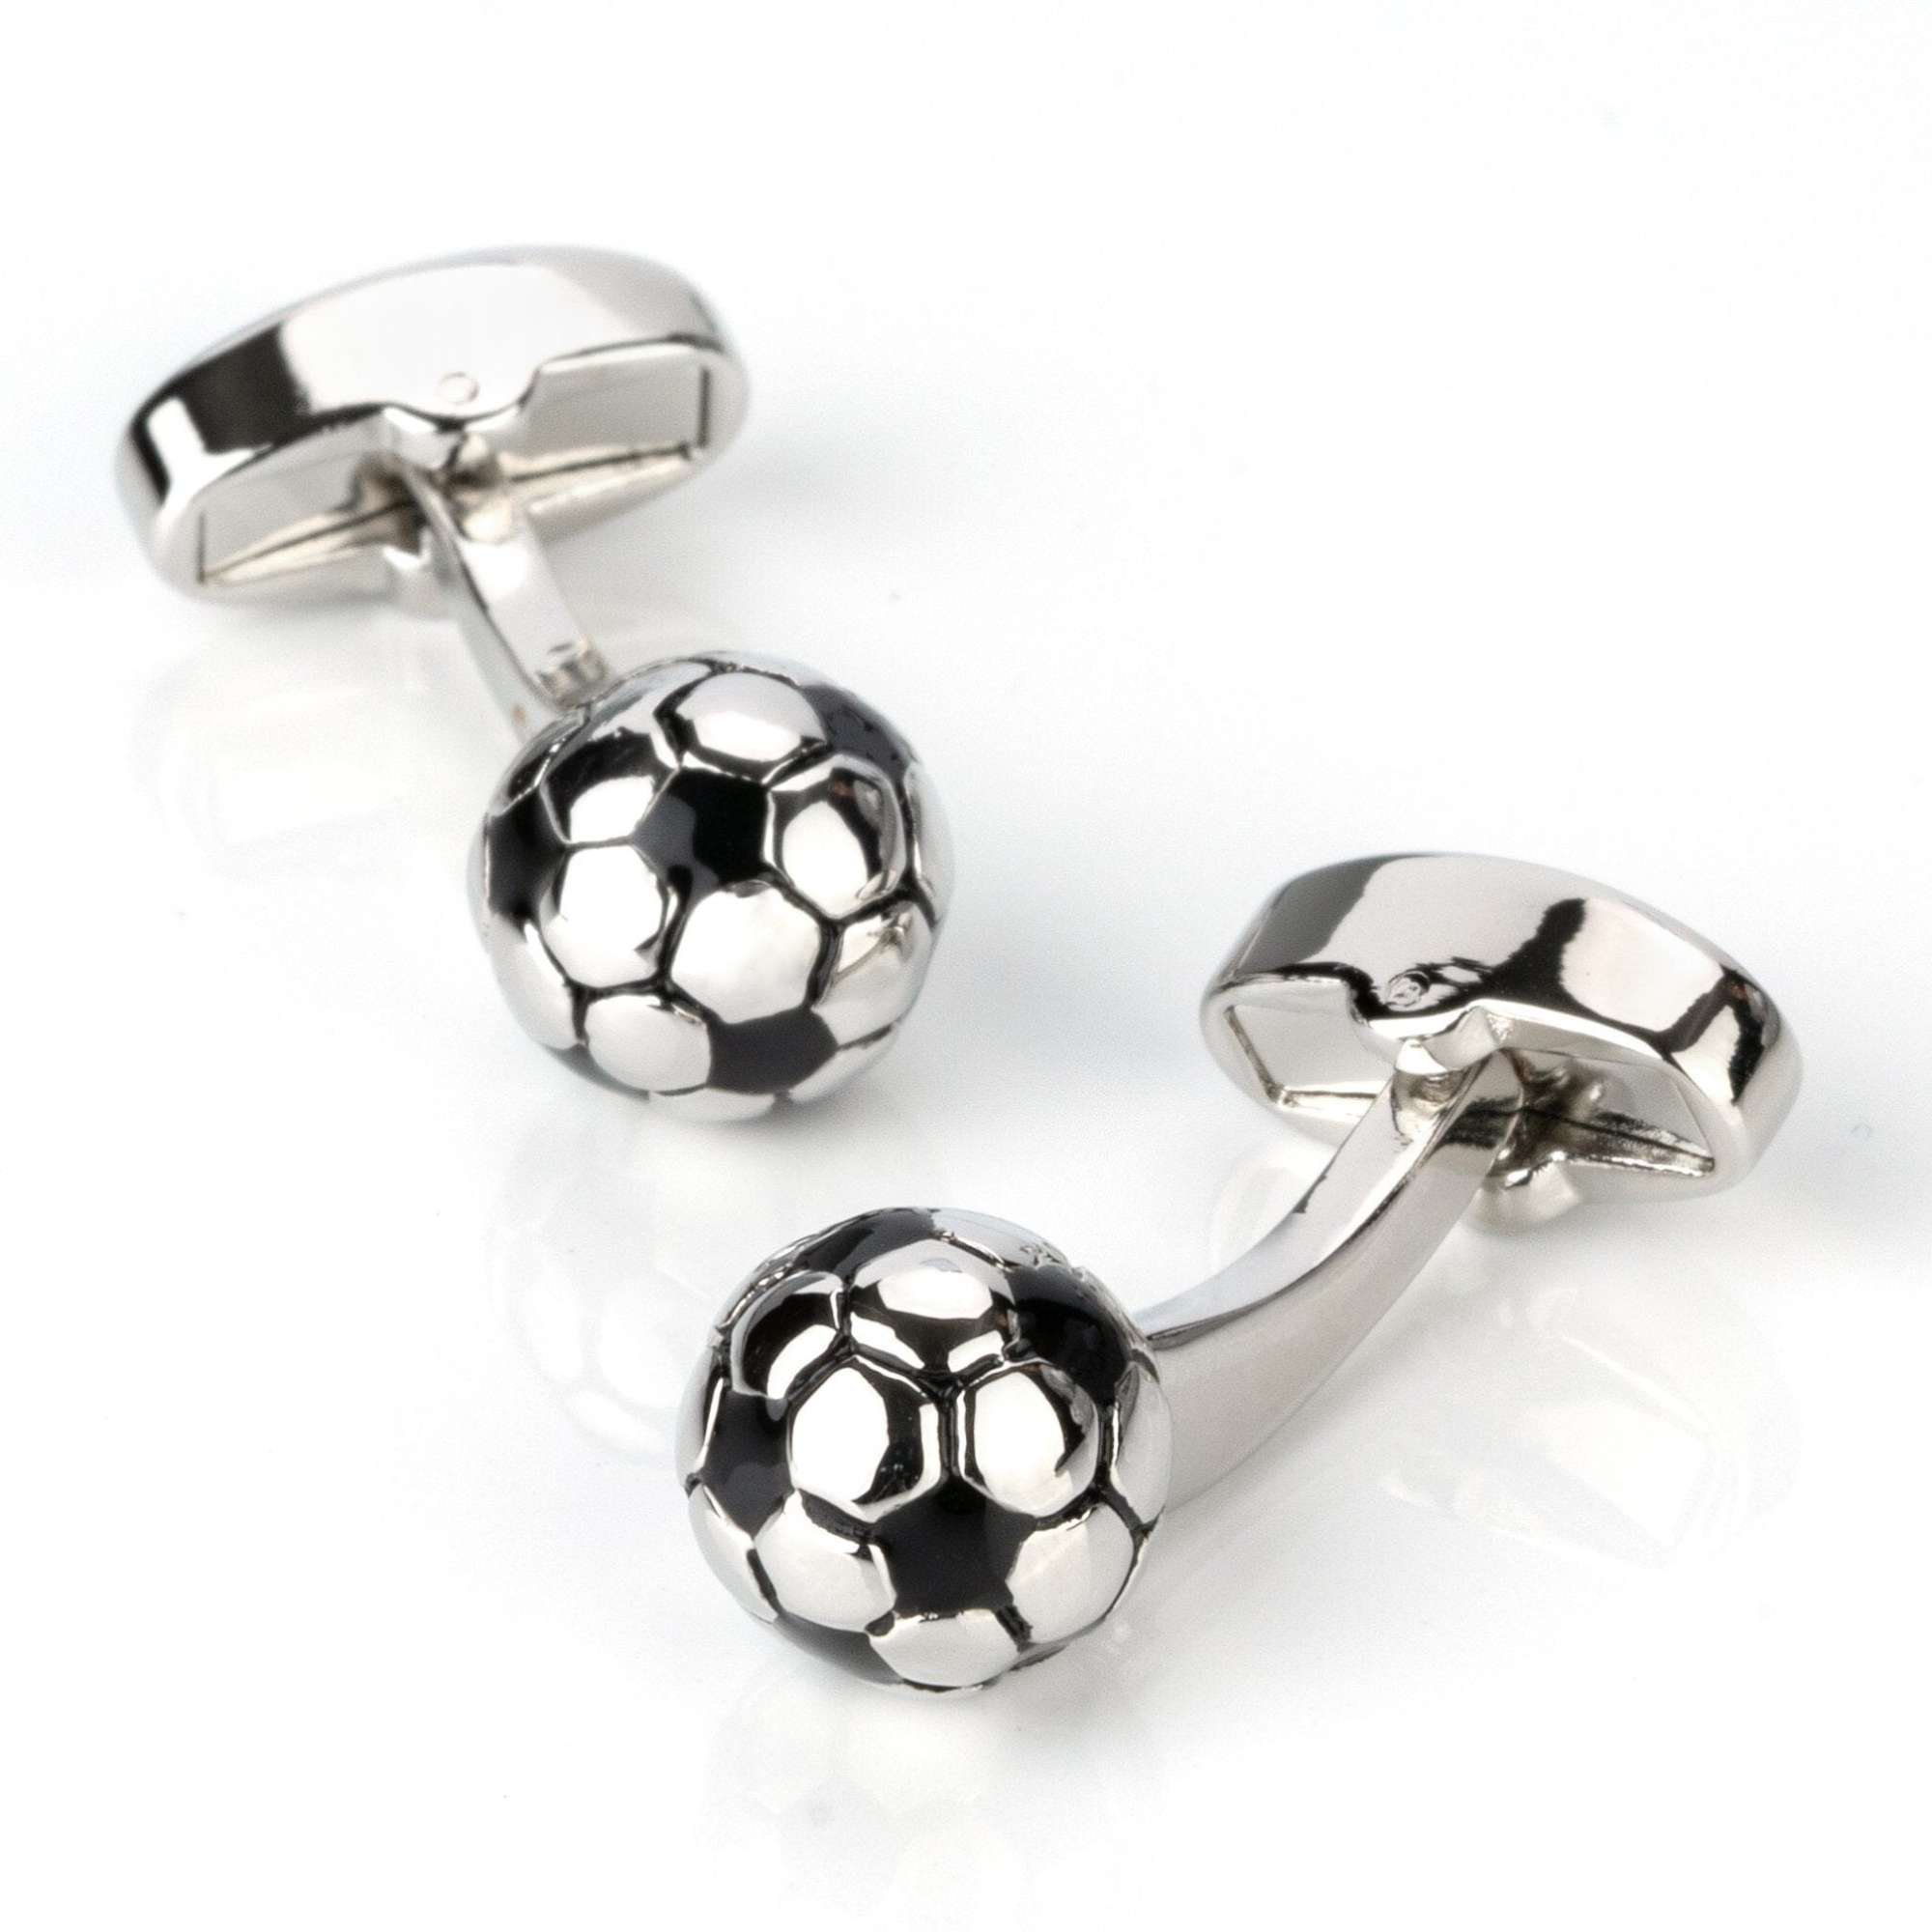 3D Silver and Black Soccer Ball Football Cufflinks